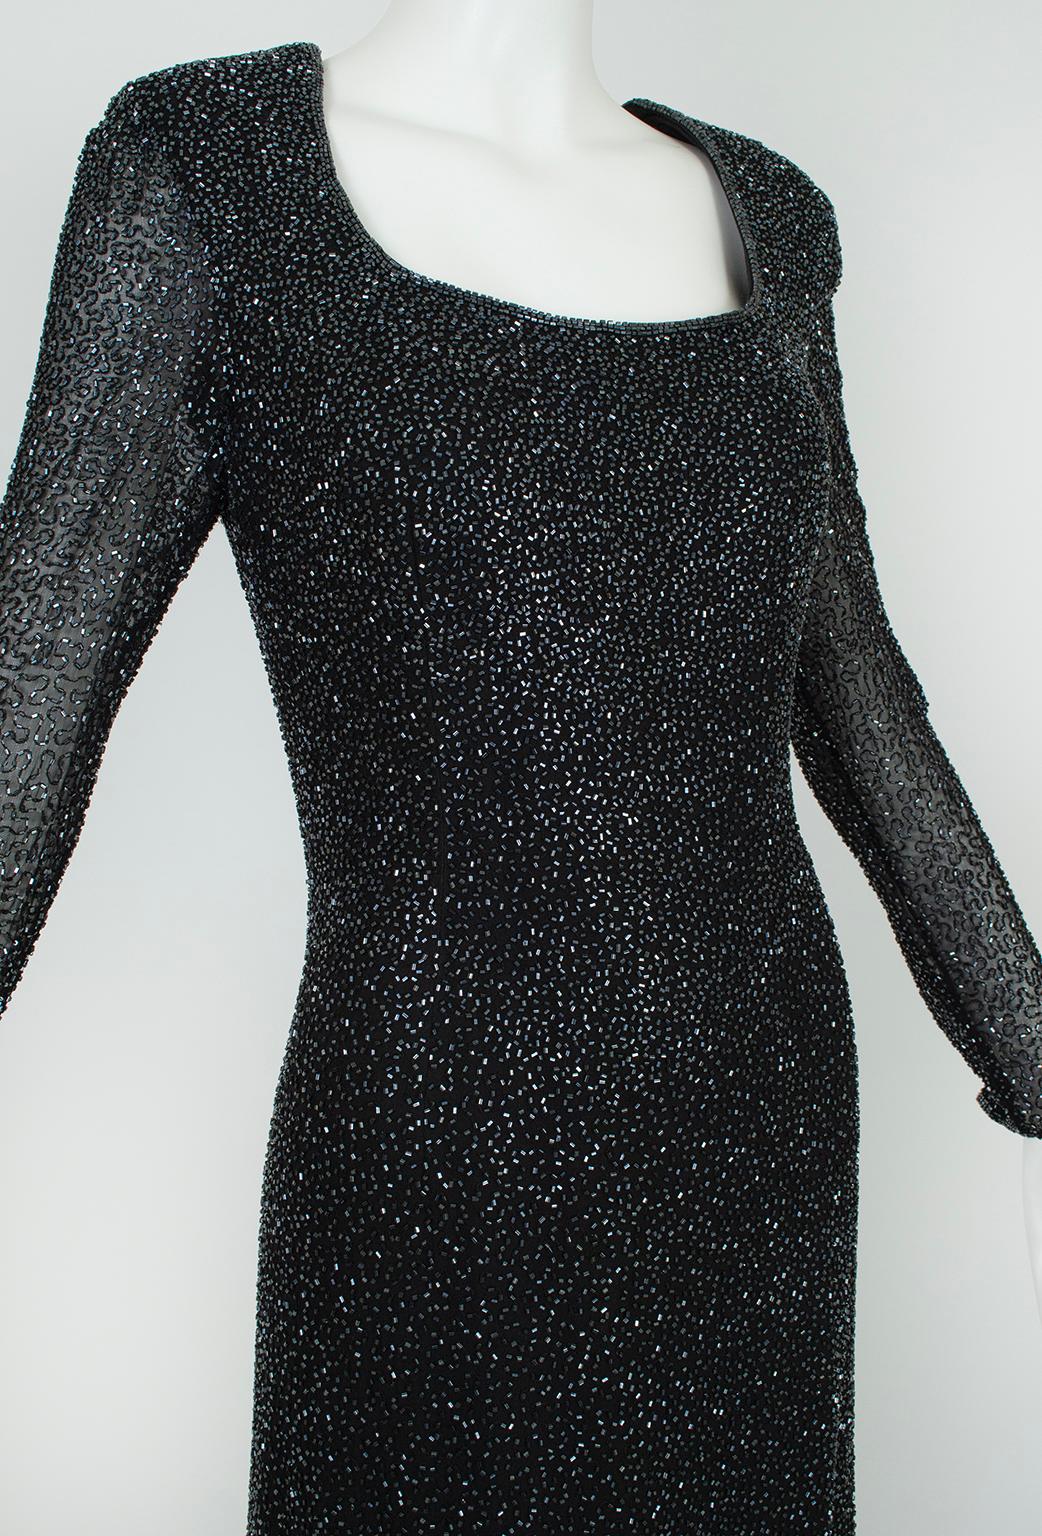 Lillie Rubin Black Full Length Beaded Column Gown w Illusion Sleeves – L, 21st C For Sale 1